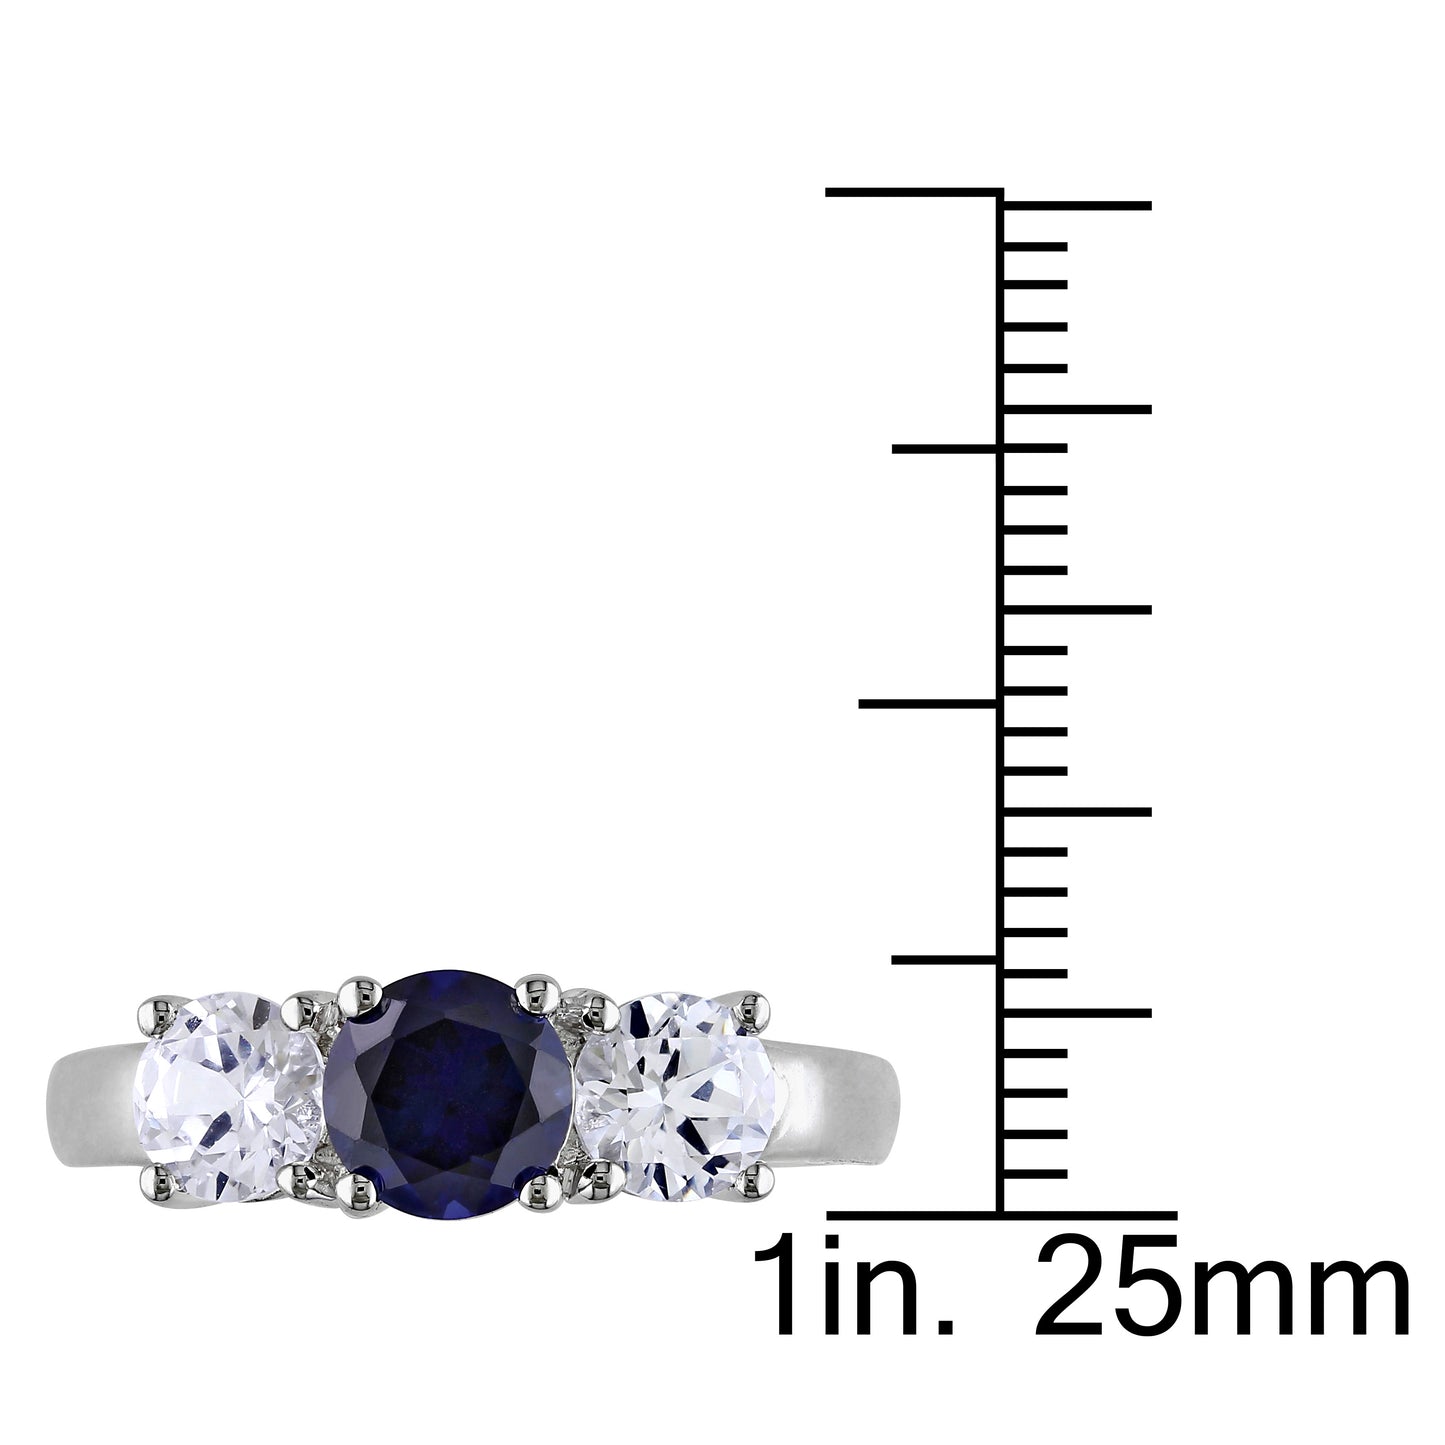 3 Stone White & Blue Sapphire Ring in 10k White Gold